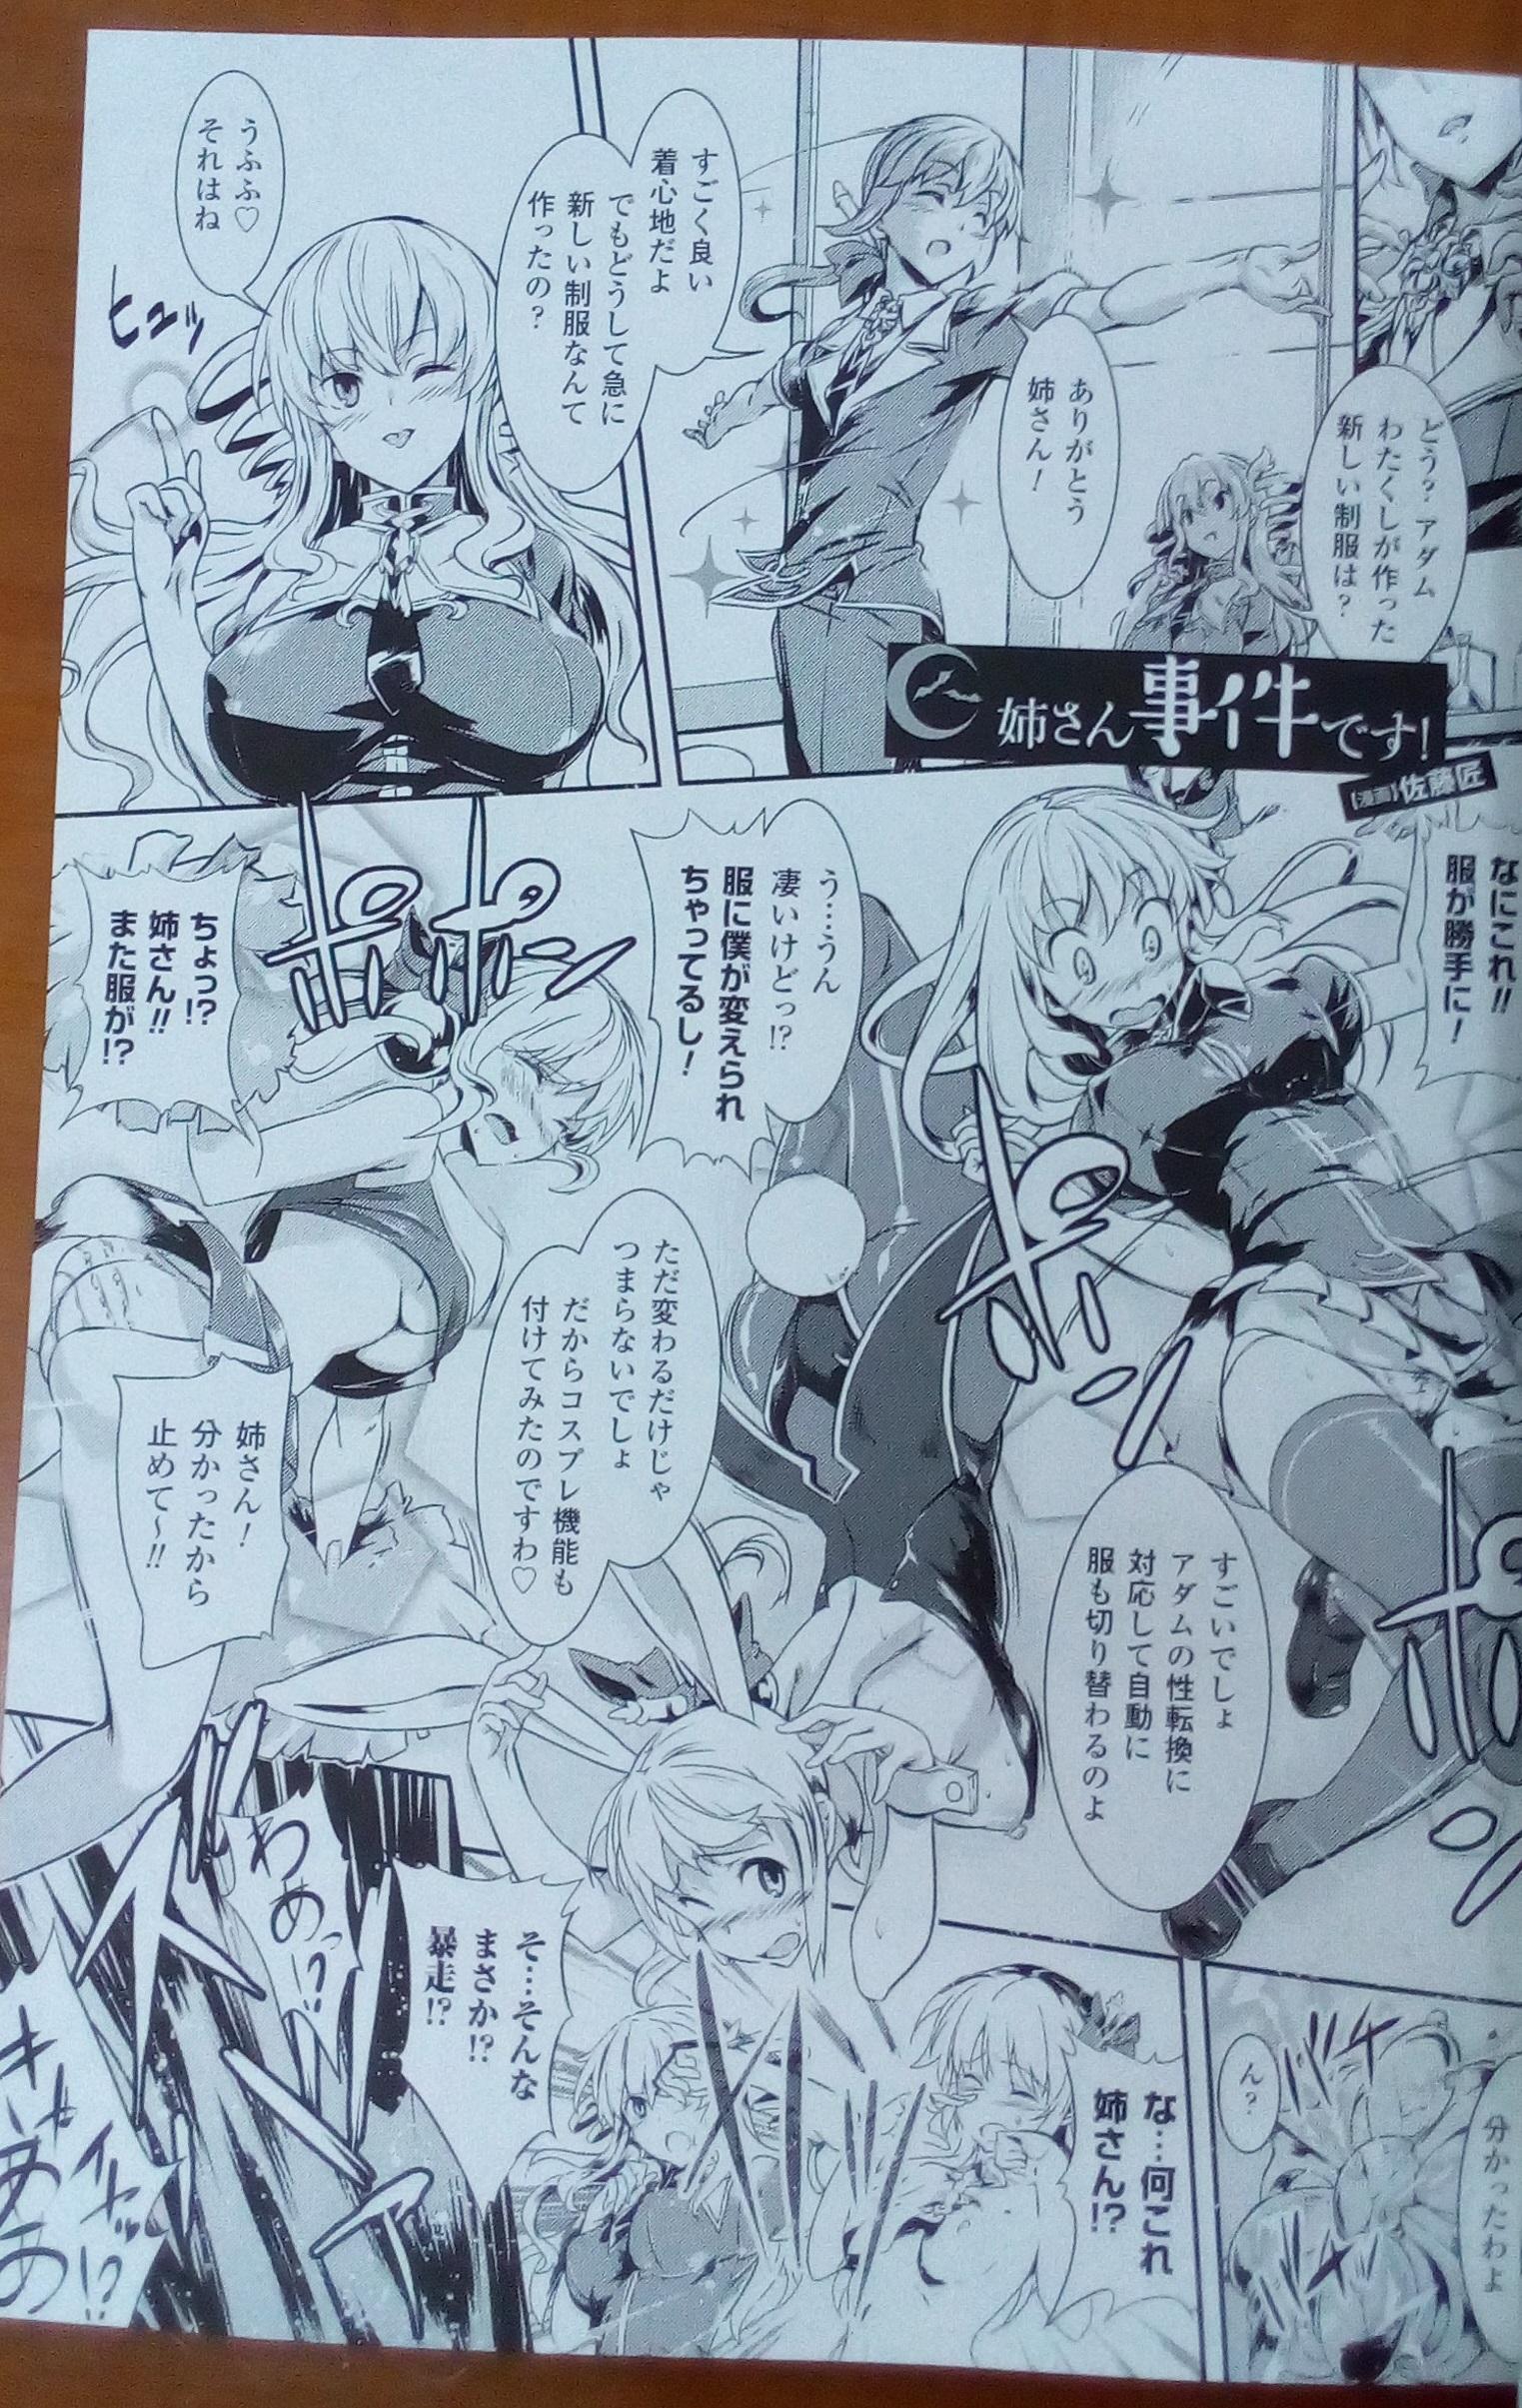 [Erect Sawaru] Shinkyoku no Grimoire III -PANDRA saga 2nd story-  Append book [Photoed] 7